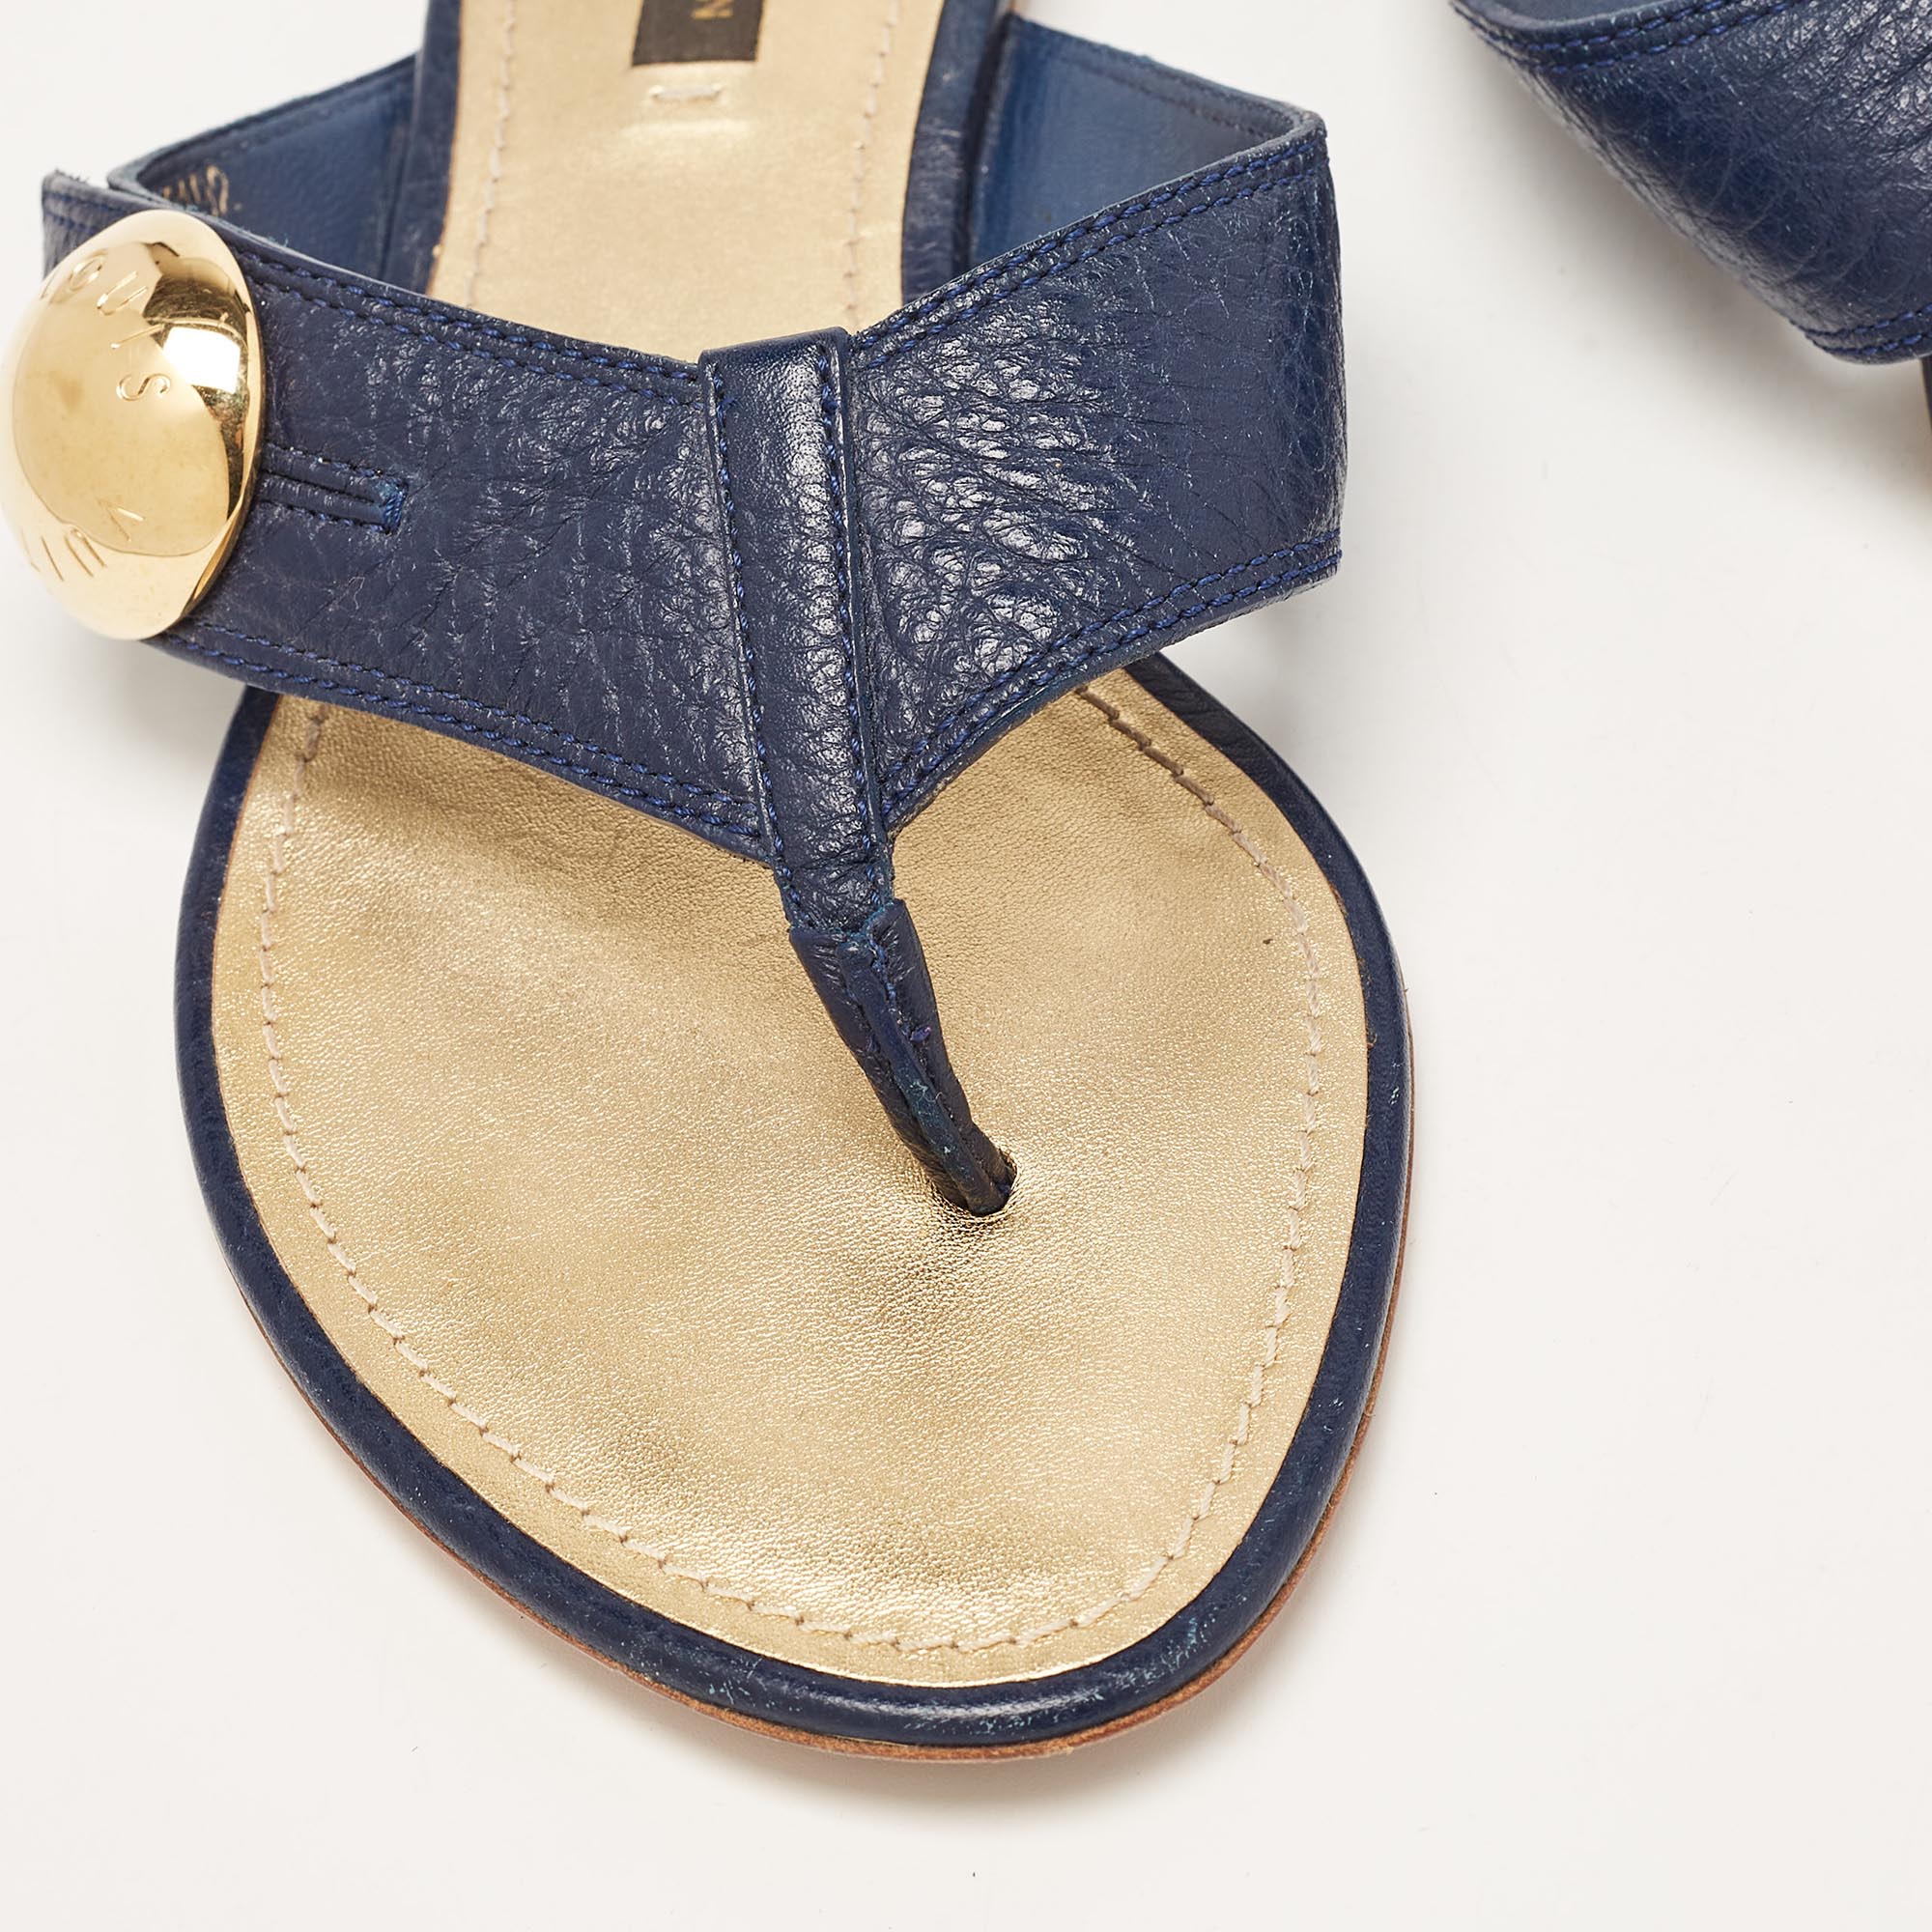 Louis Vuitton Blue Leather Thong Flat Slides Size 37